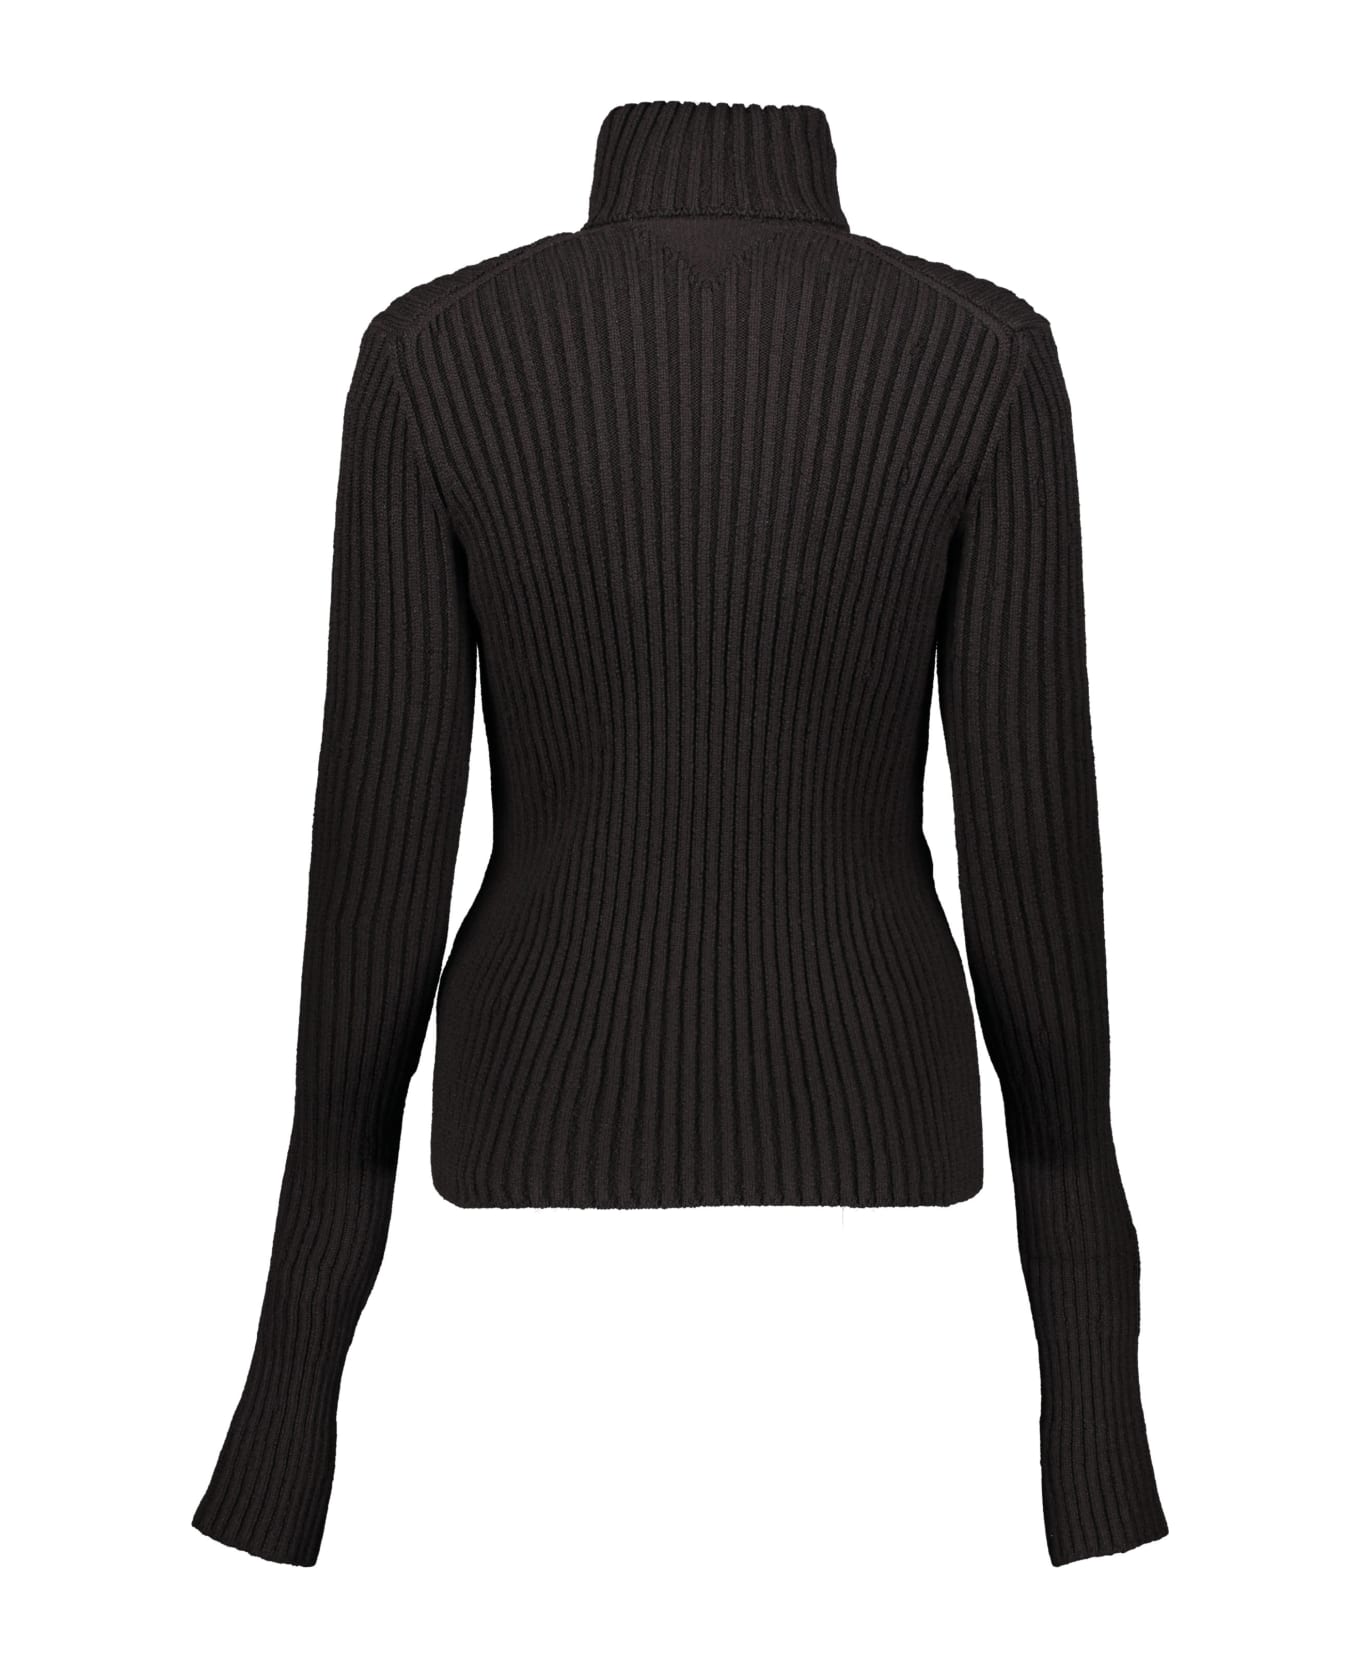 Bottega Veneta Wool Turtleneck Sweater - black